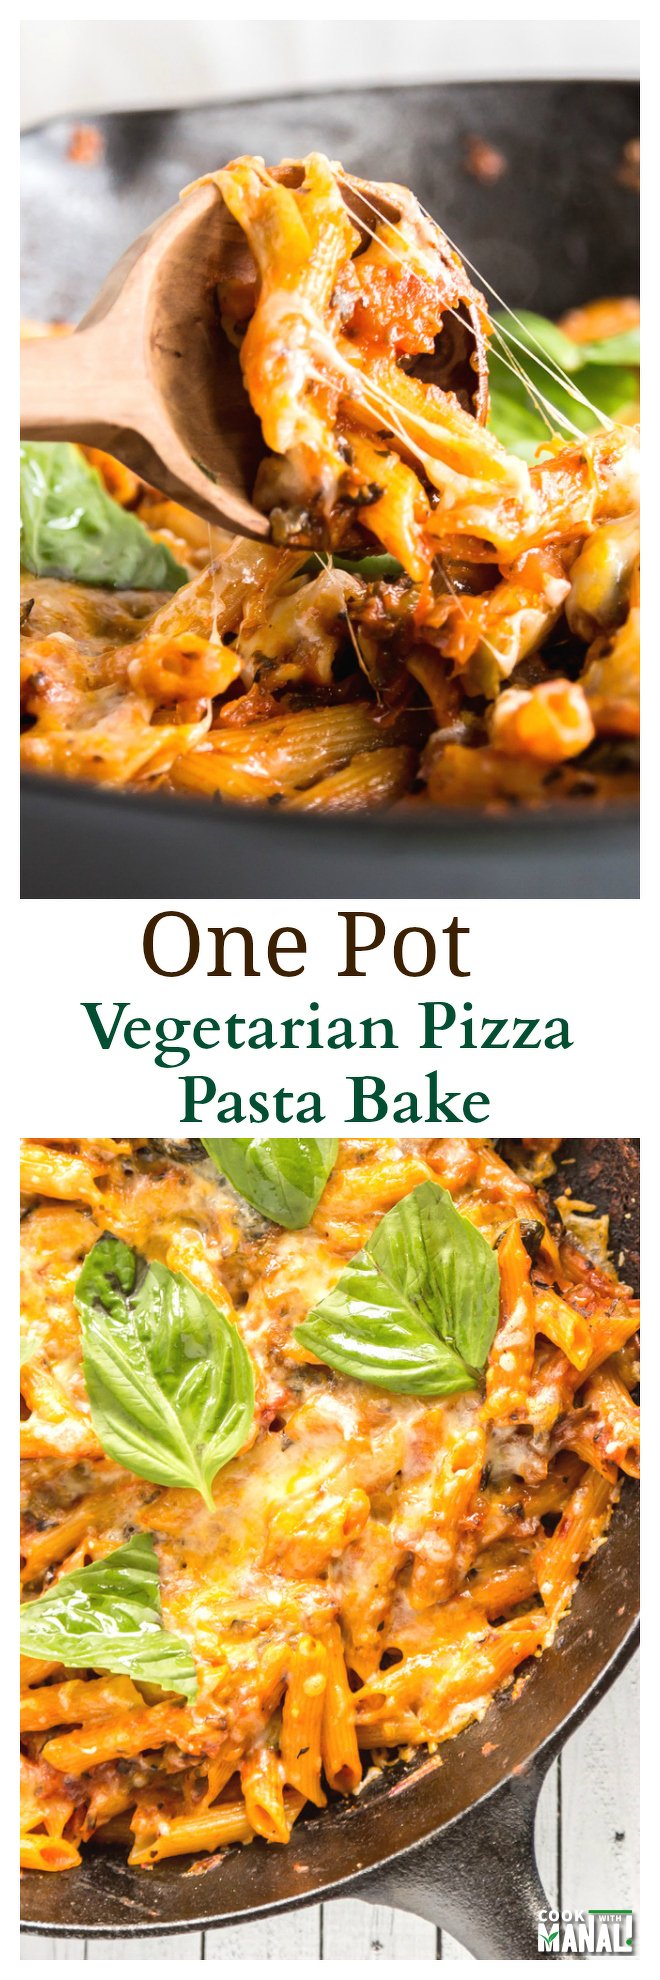 One Pot Vegetarian Pizza Pasta Bake Collage